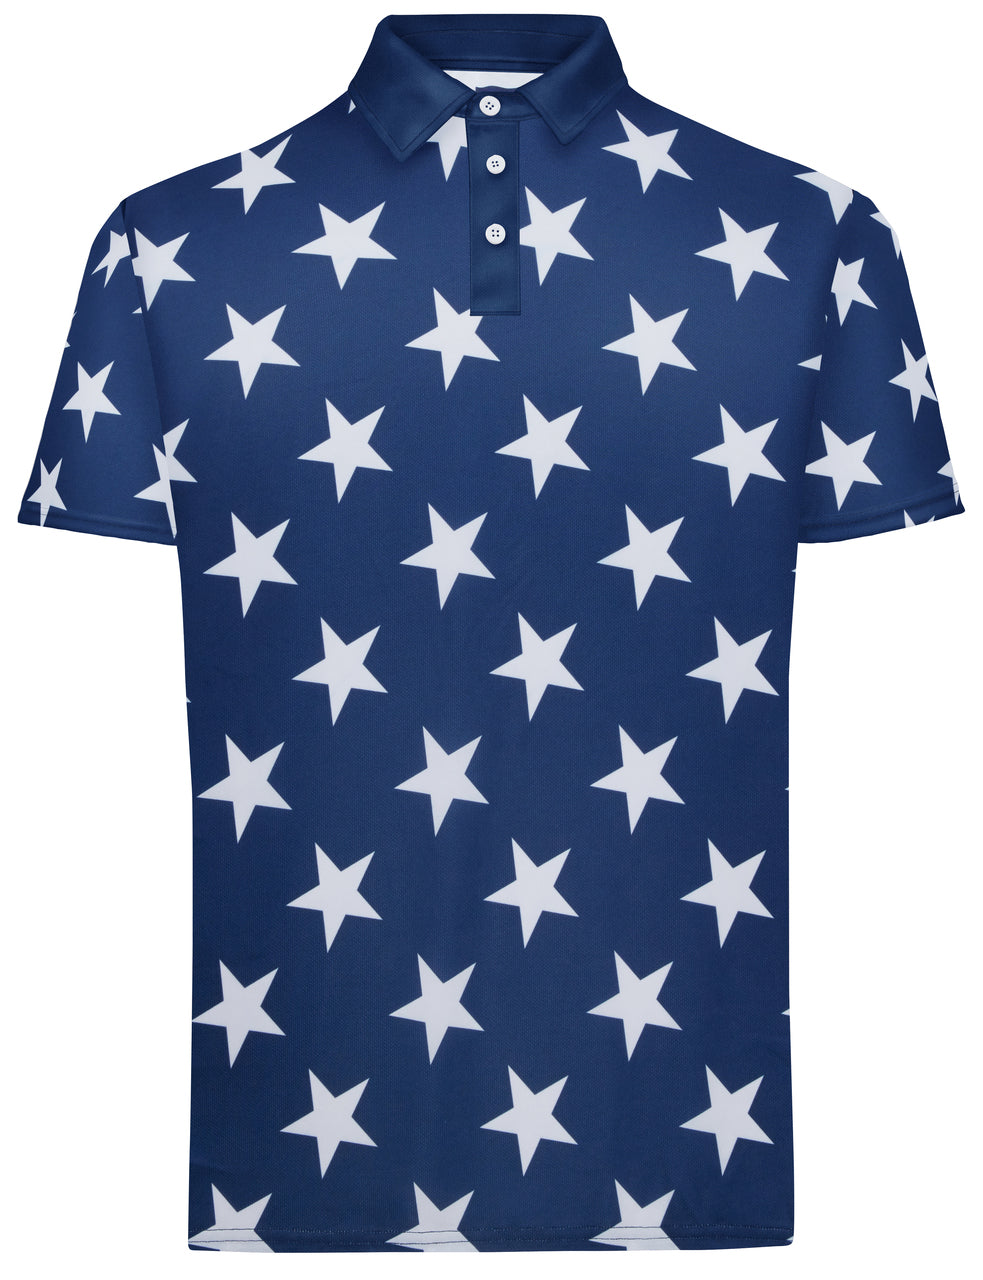 Tattoo Golf Clothing  Free Shipping, Premium Quality Golf Shirts